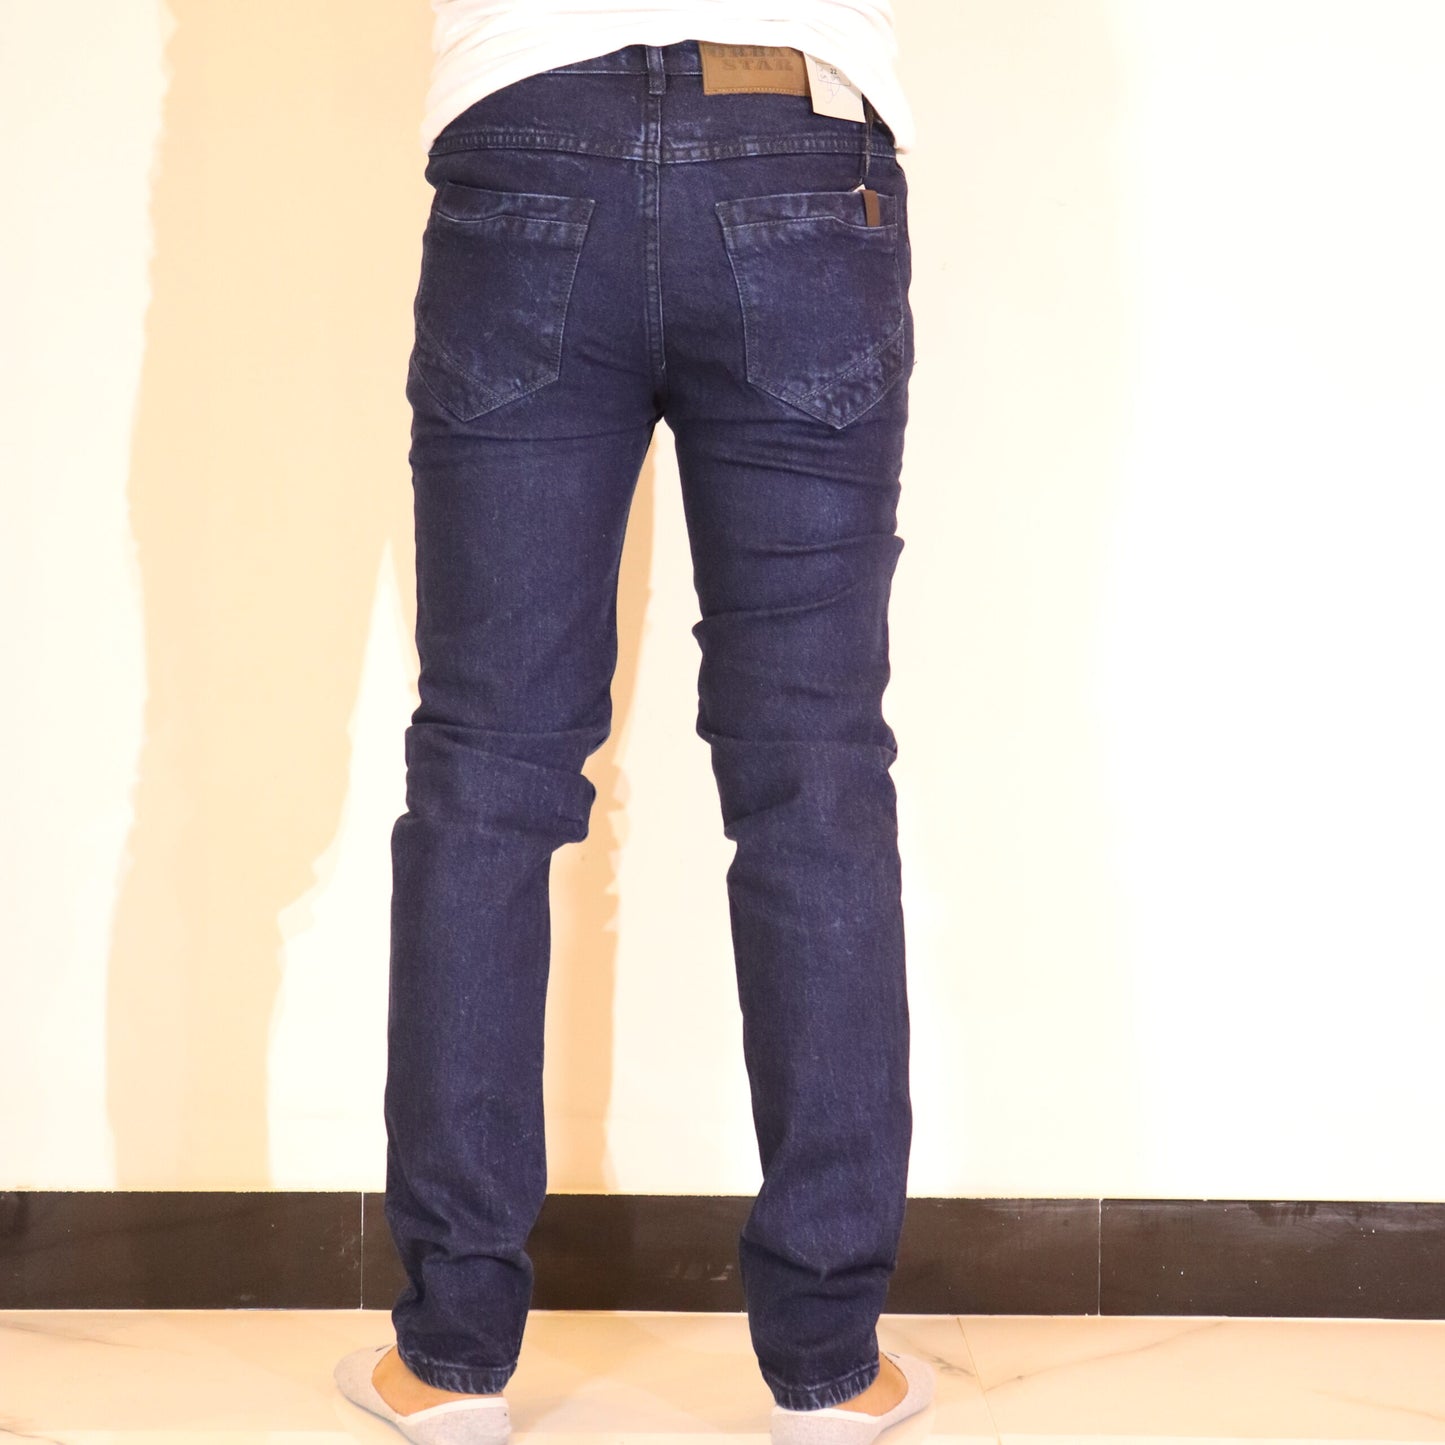 Dark Blue Jeans Pant For Men Casual Wear #5110